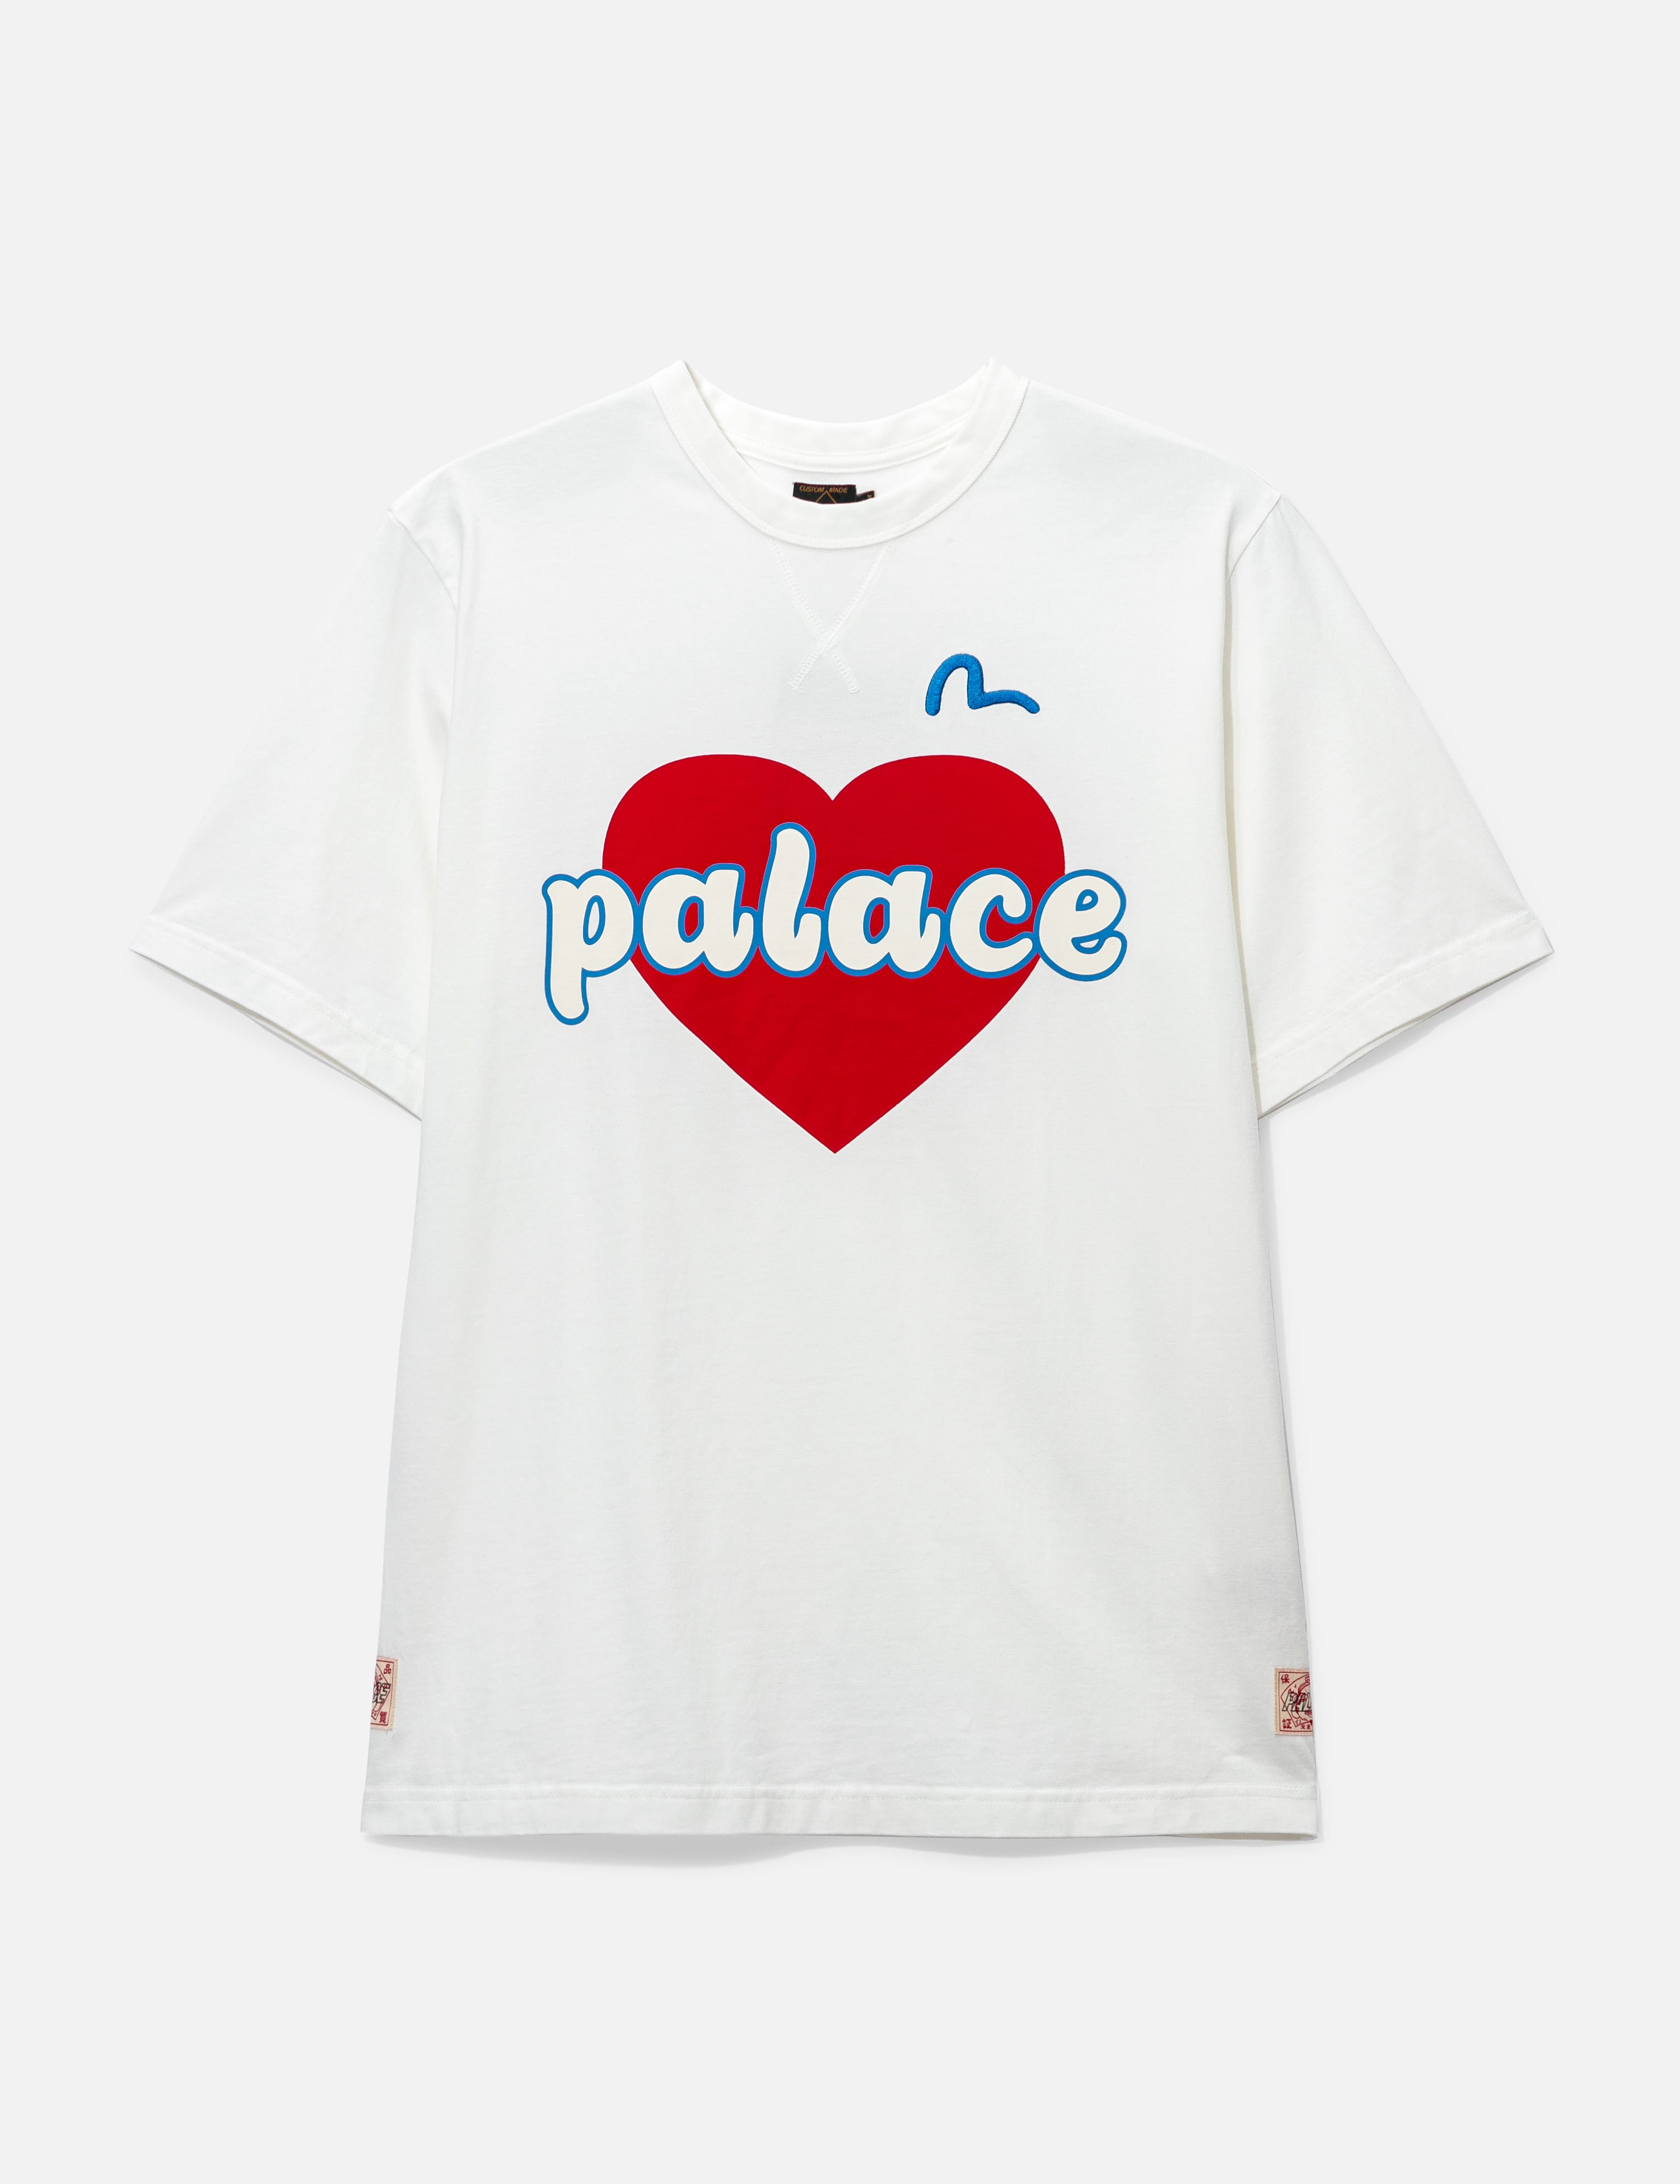 Palace Skateboards - Palace x Evisu T-shirt | HBX - ハイプビースト 